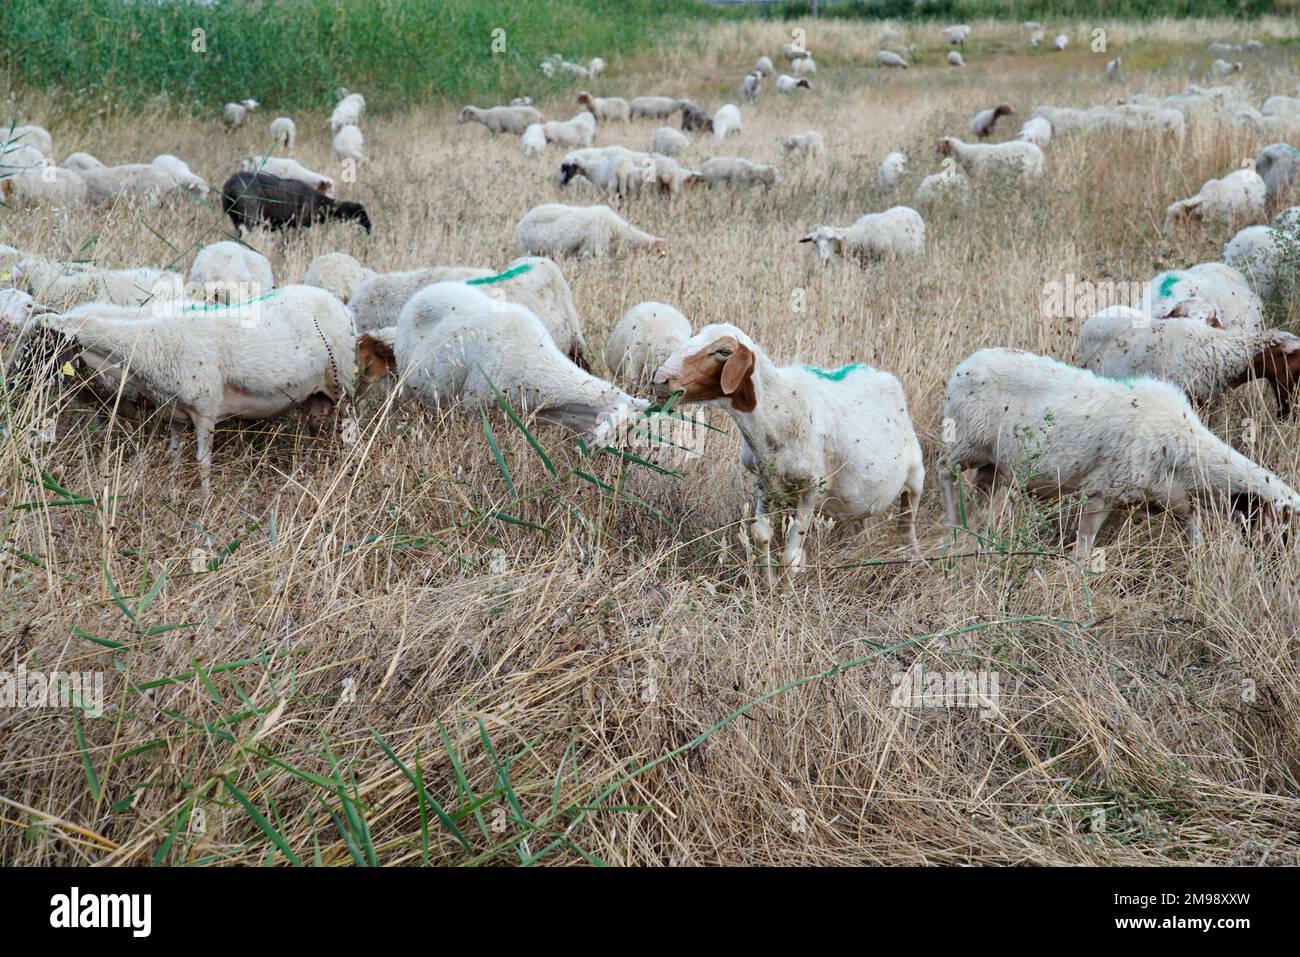 Sheep in the pasture,Craco,Province of Matera,Basilicata Region,Italy Stock Photo